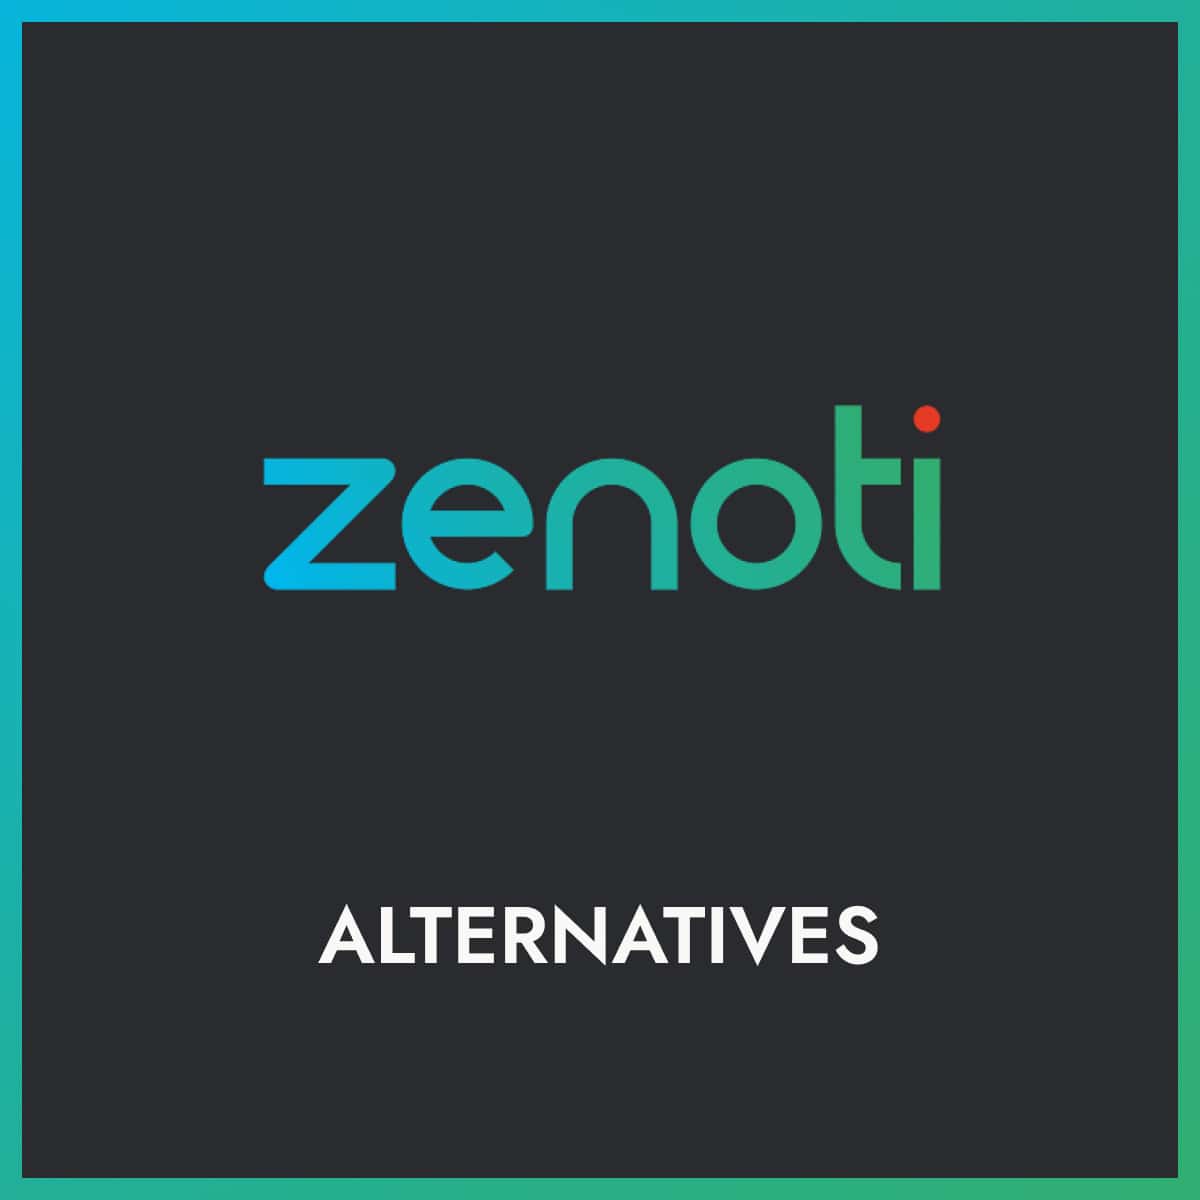 Zenoti brand logo above the word "alternatives"